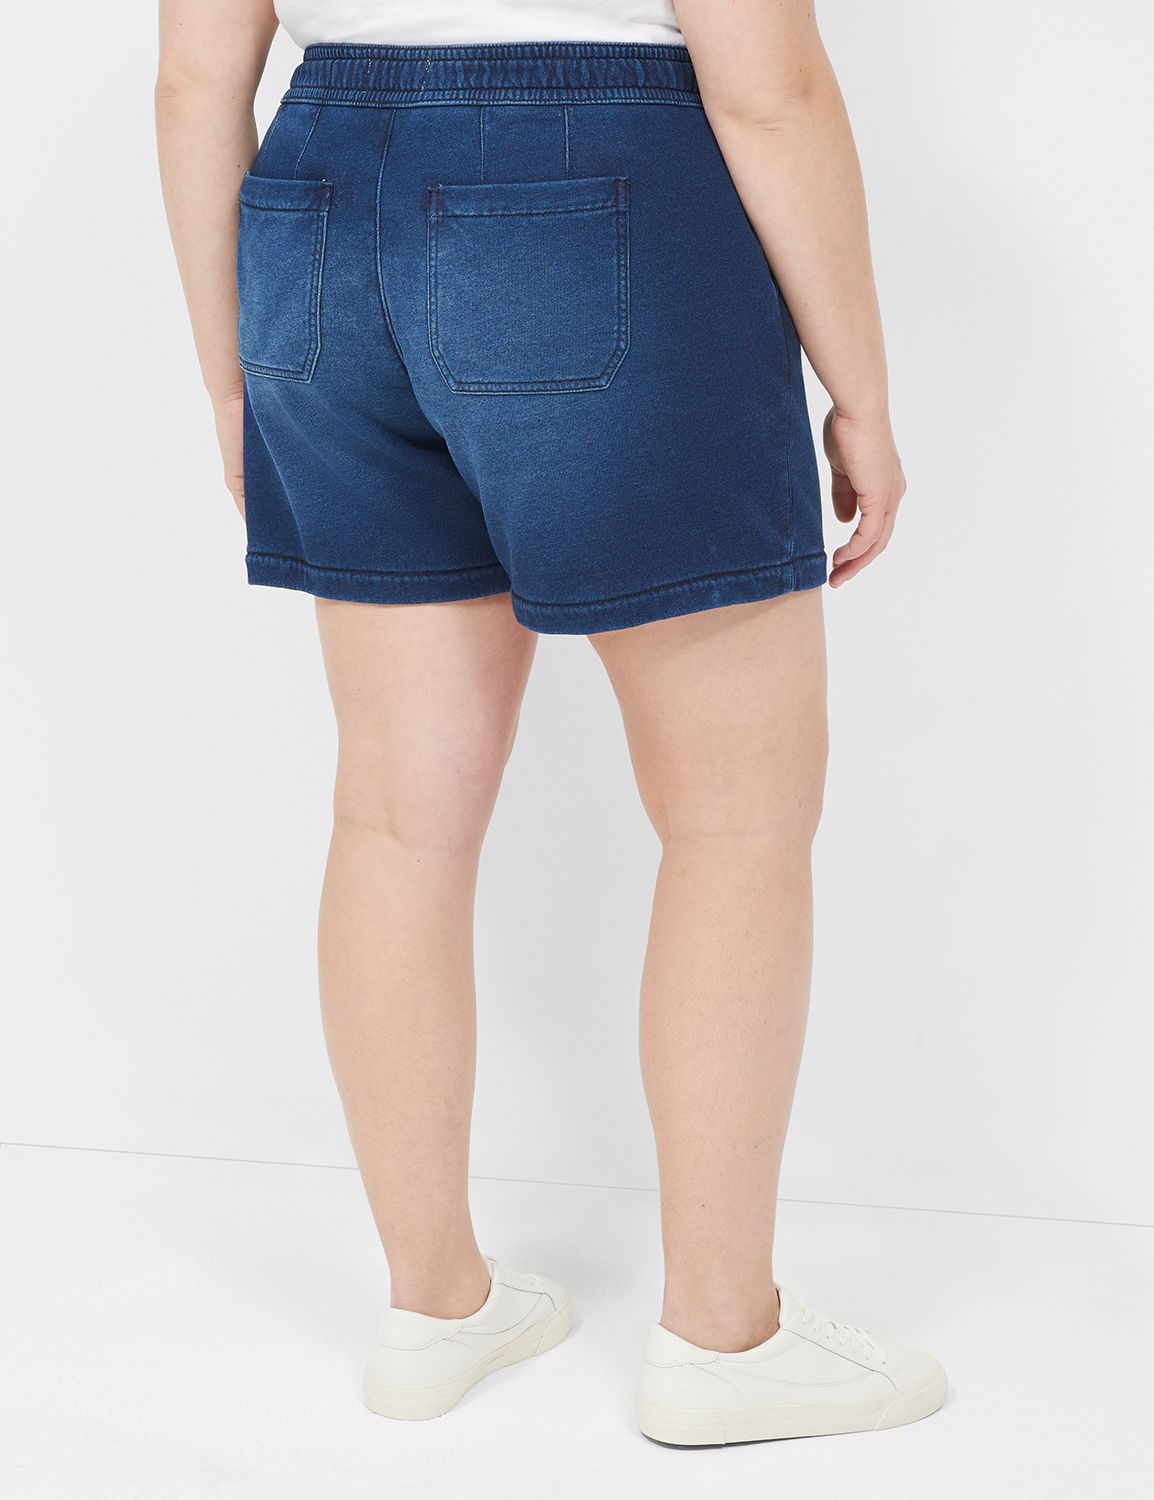 Lane Bryant Capris Denim Jeans Women's Size 20 Light Wash GUC Plus Size -  $10 - From Tricia